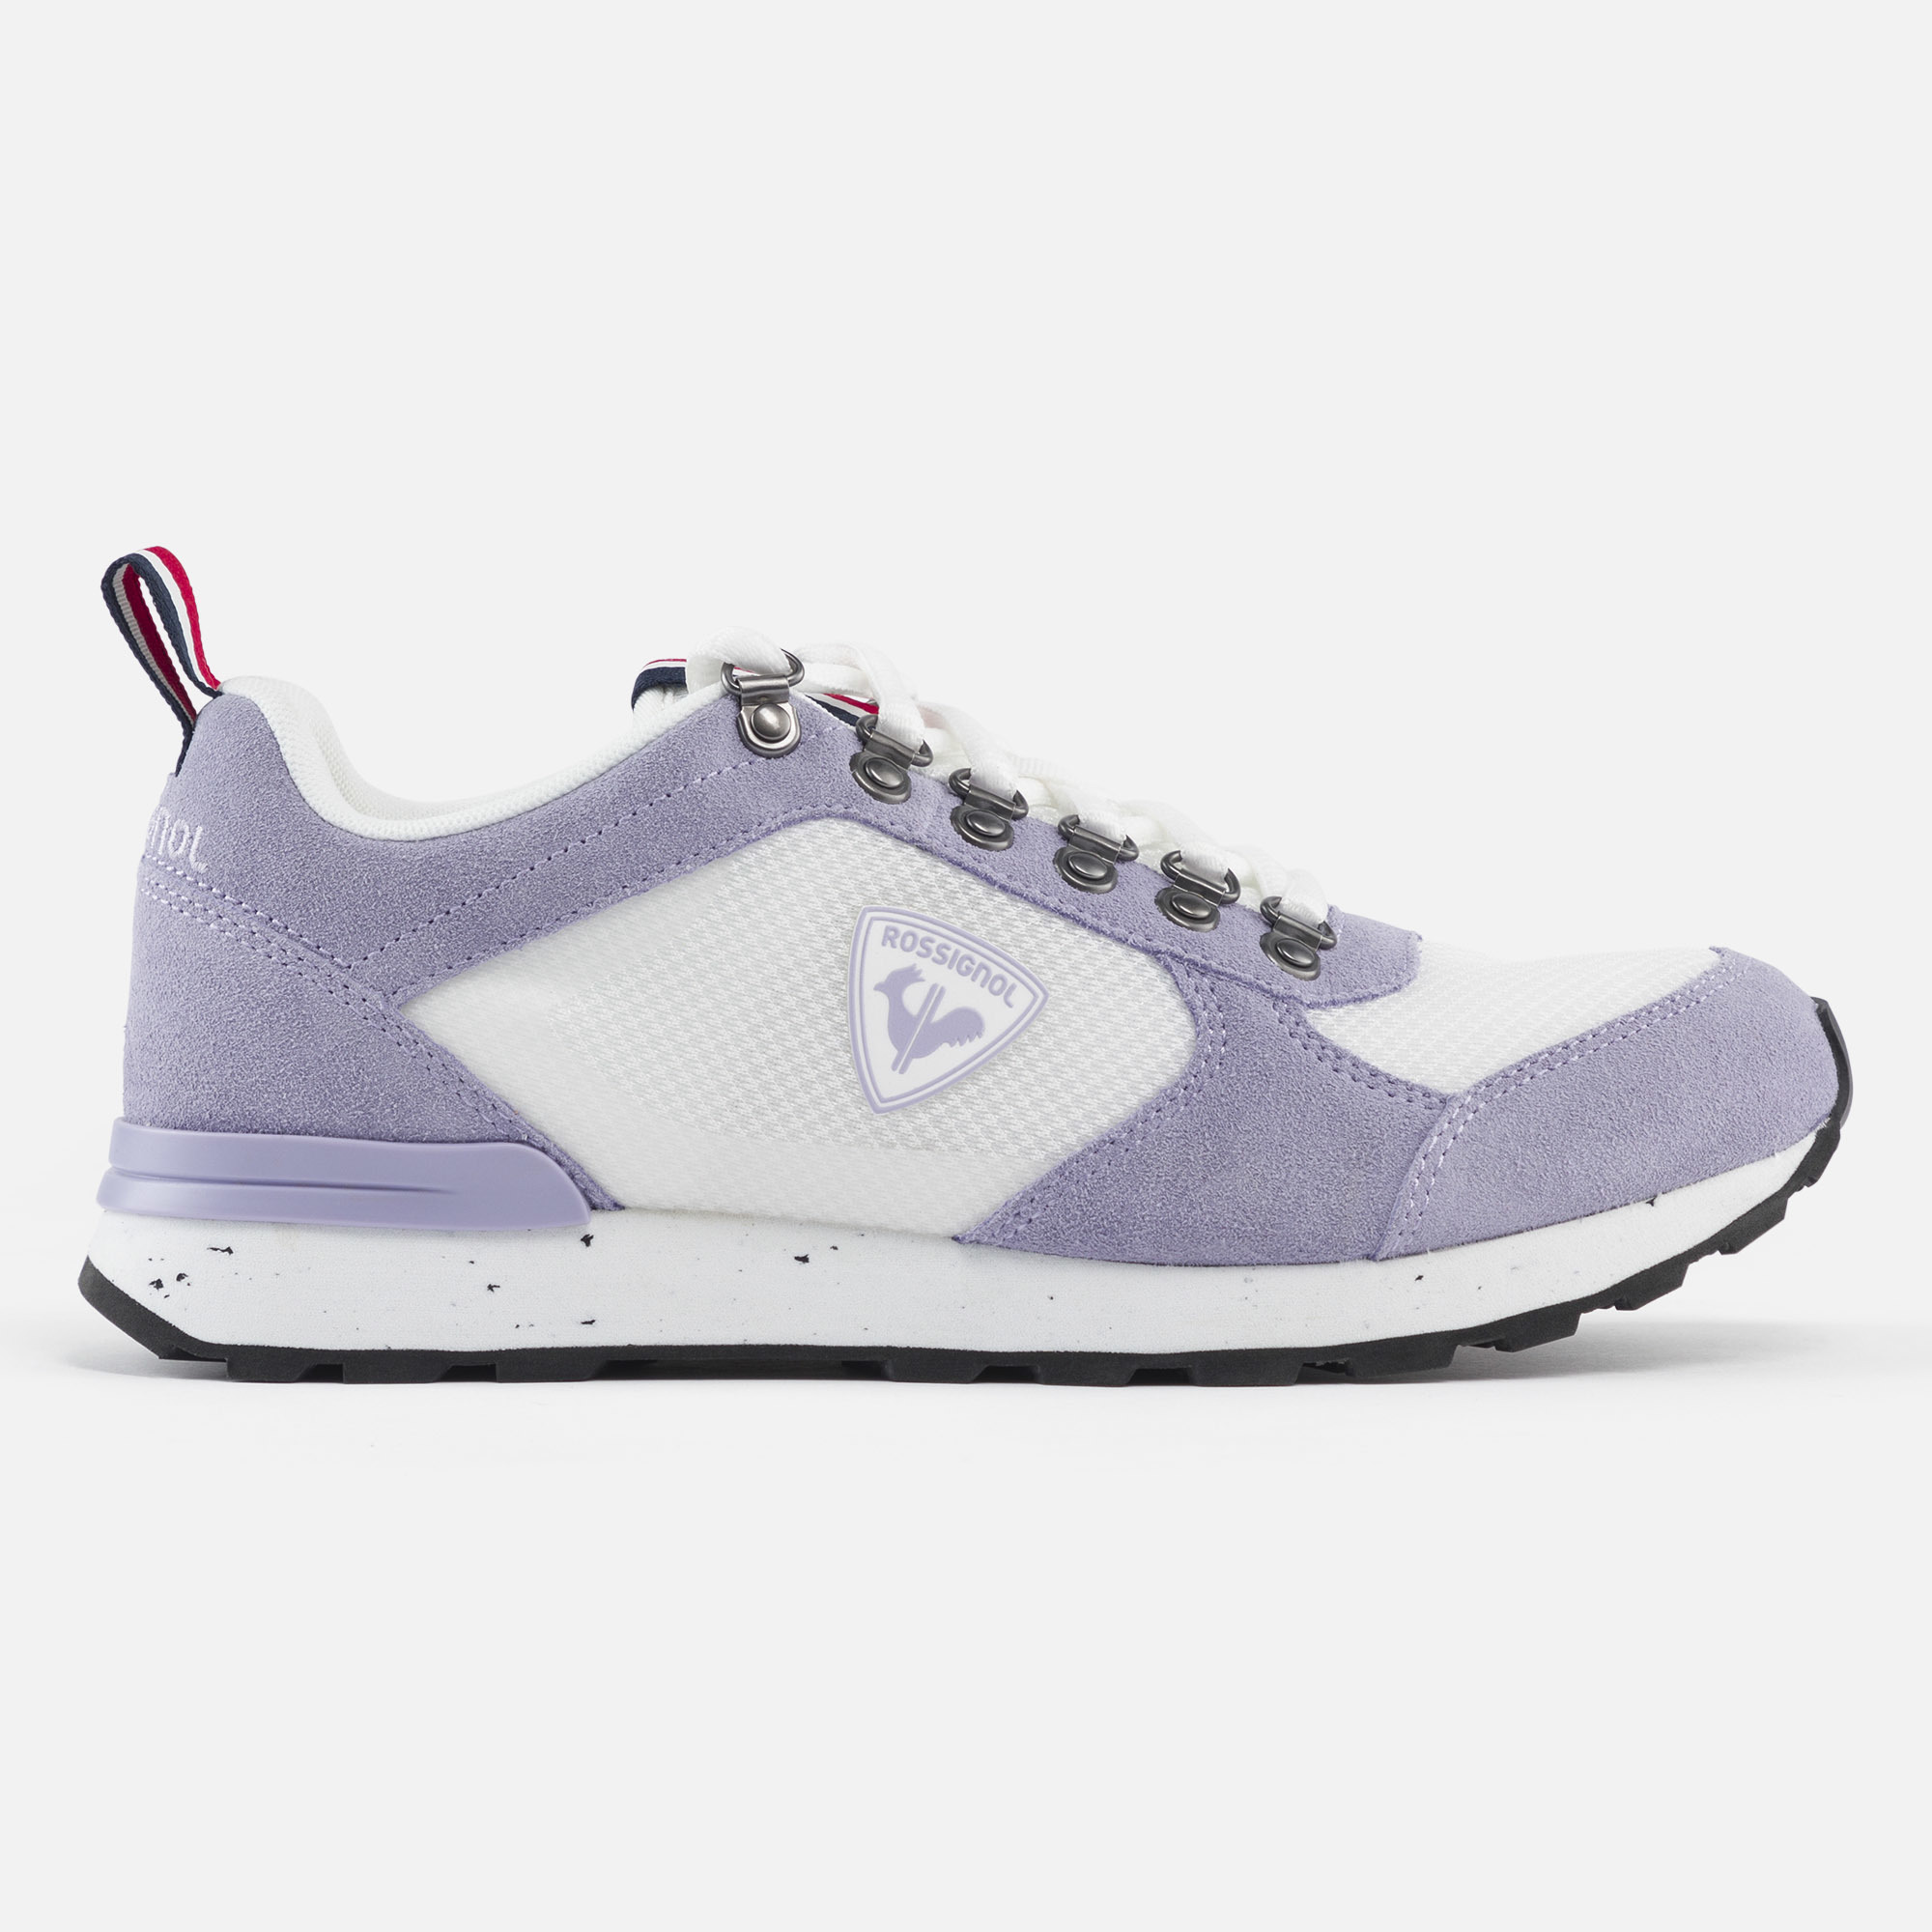 Men's Heritage Special lavender sneakers